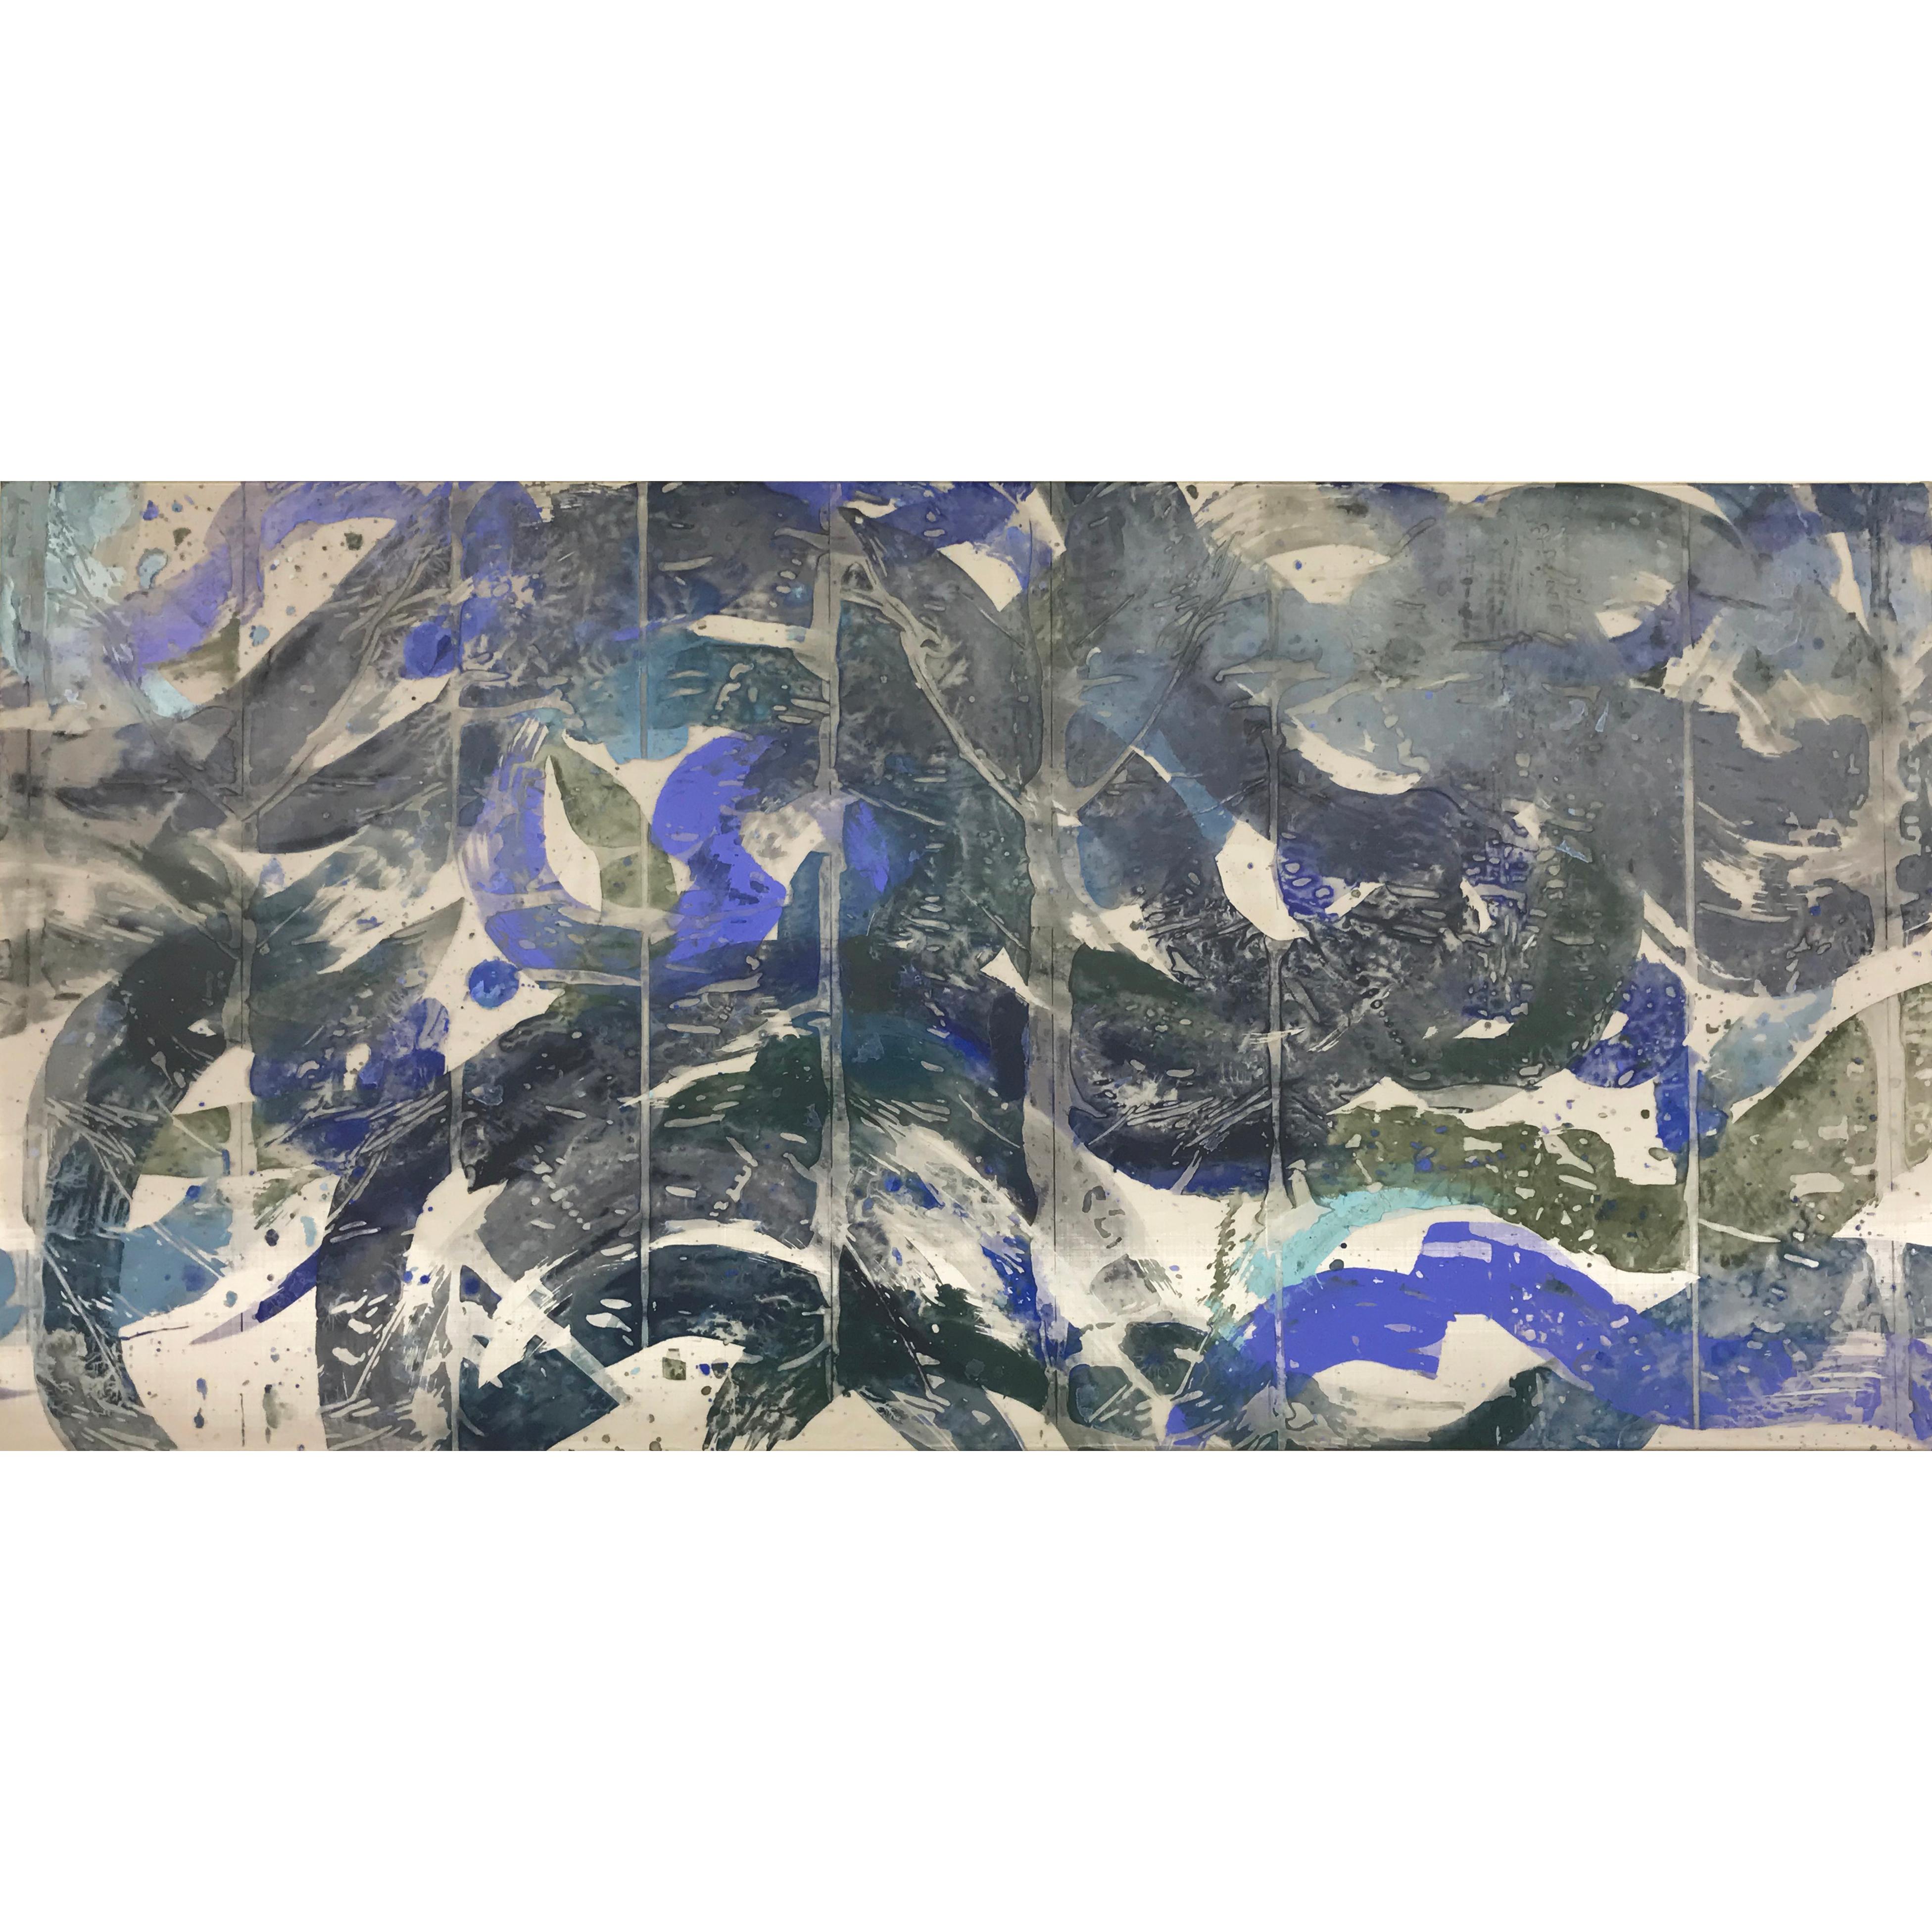 Mirang Wonne Abstract Painting - Ocean Light 3672-6